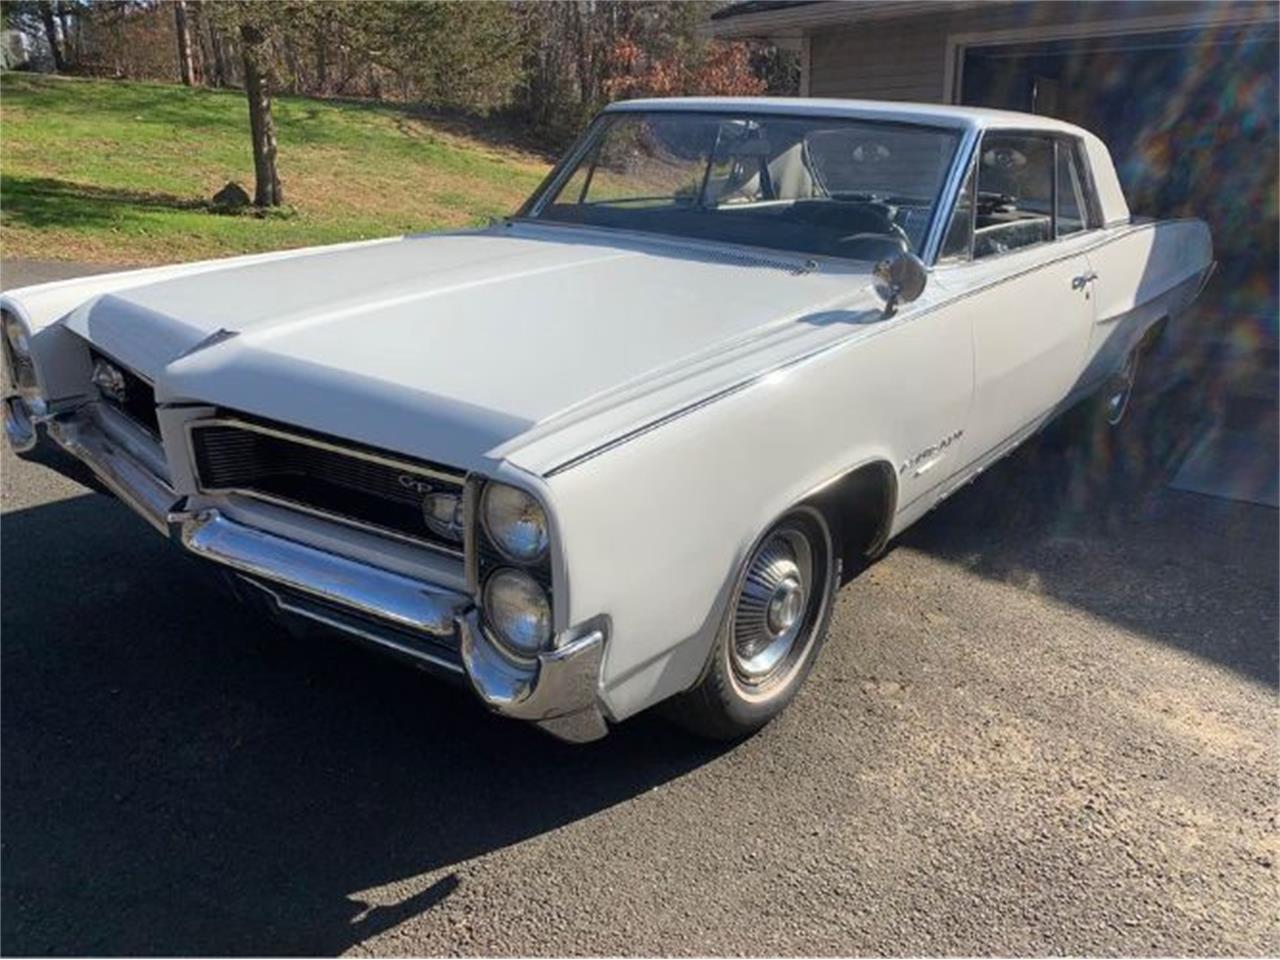 For Sale: 1964 Pontiac Grand Prix in Cadillac, Michigan for sale in Cadillac, MI